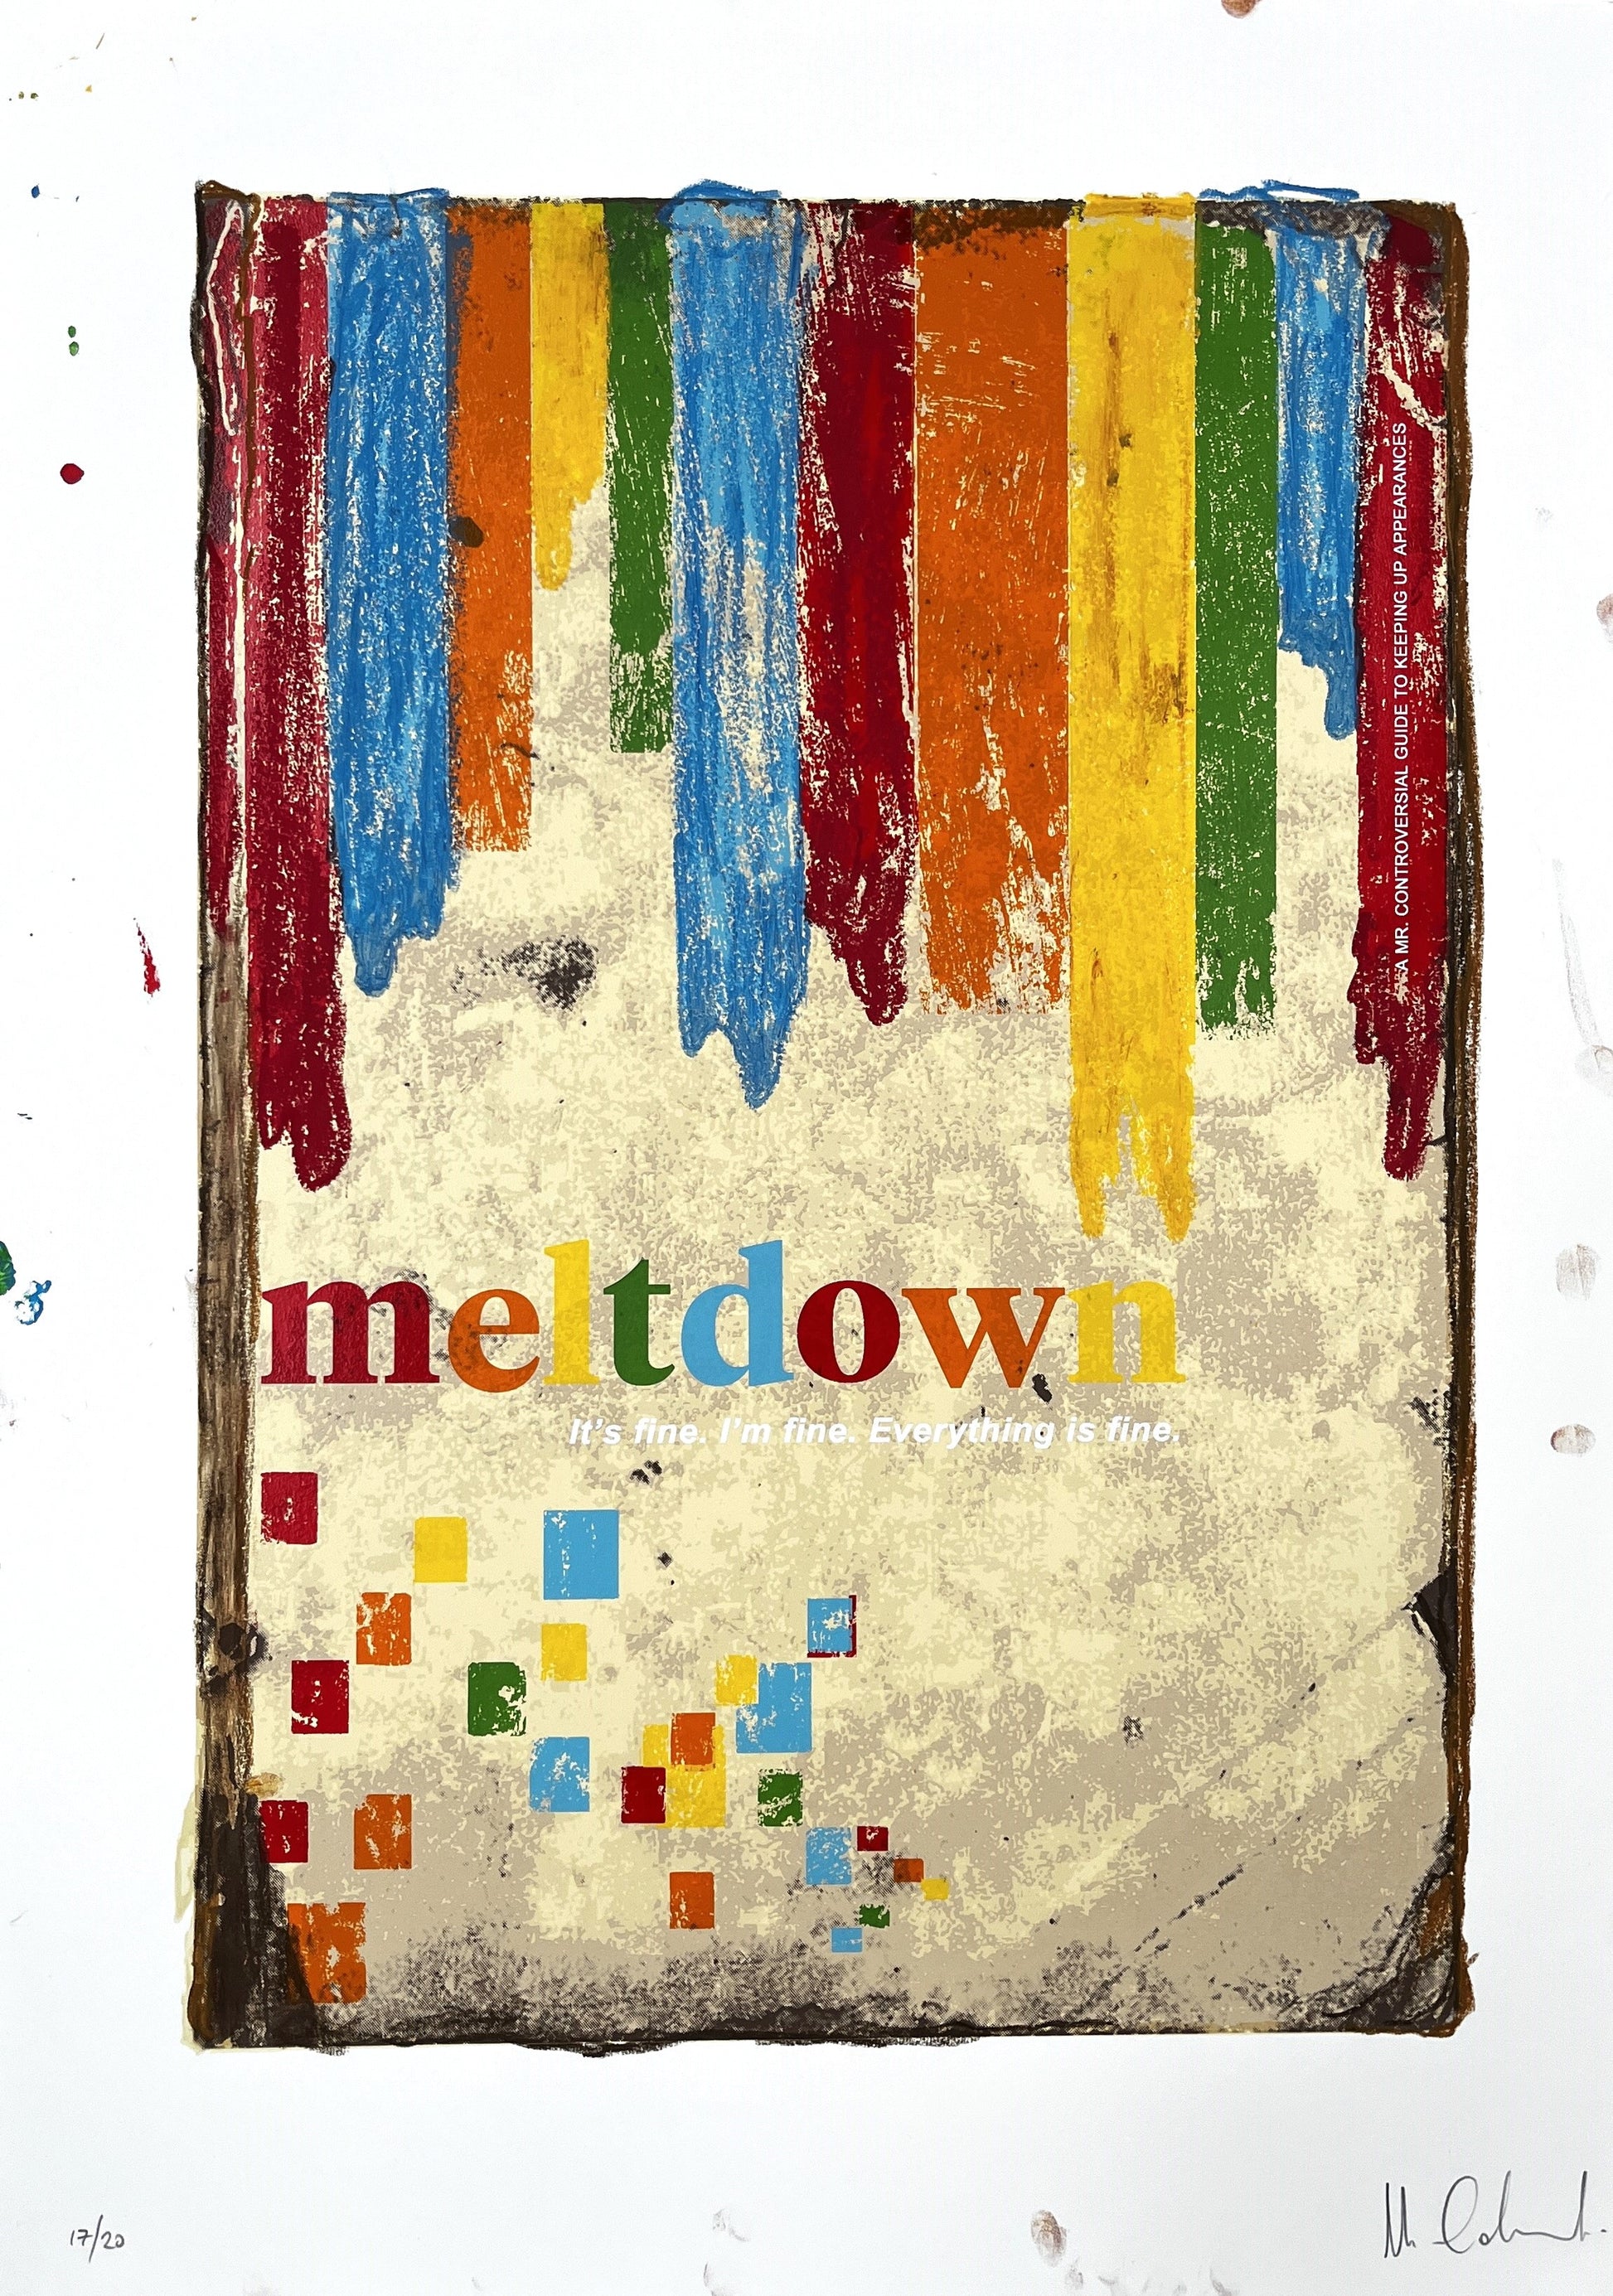 Mr Controversial, Artist, Meltdown, Colour TAP Galleries, Essex Chelmsford Art Gallery